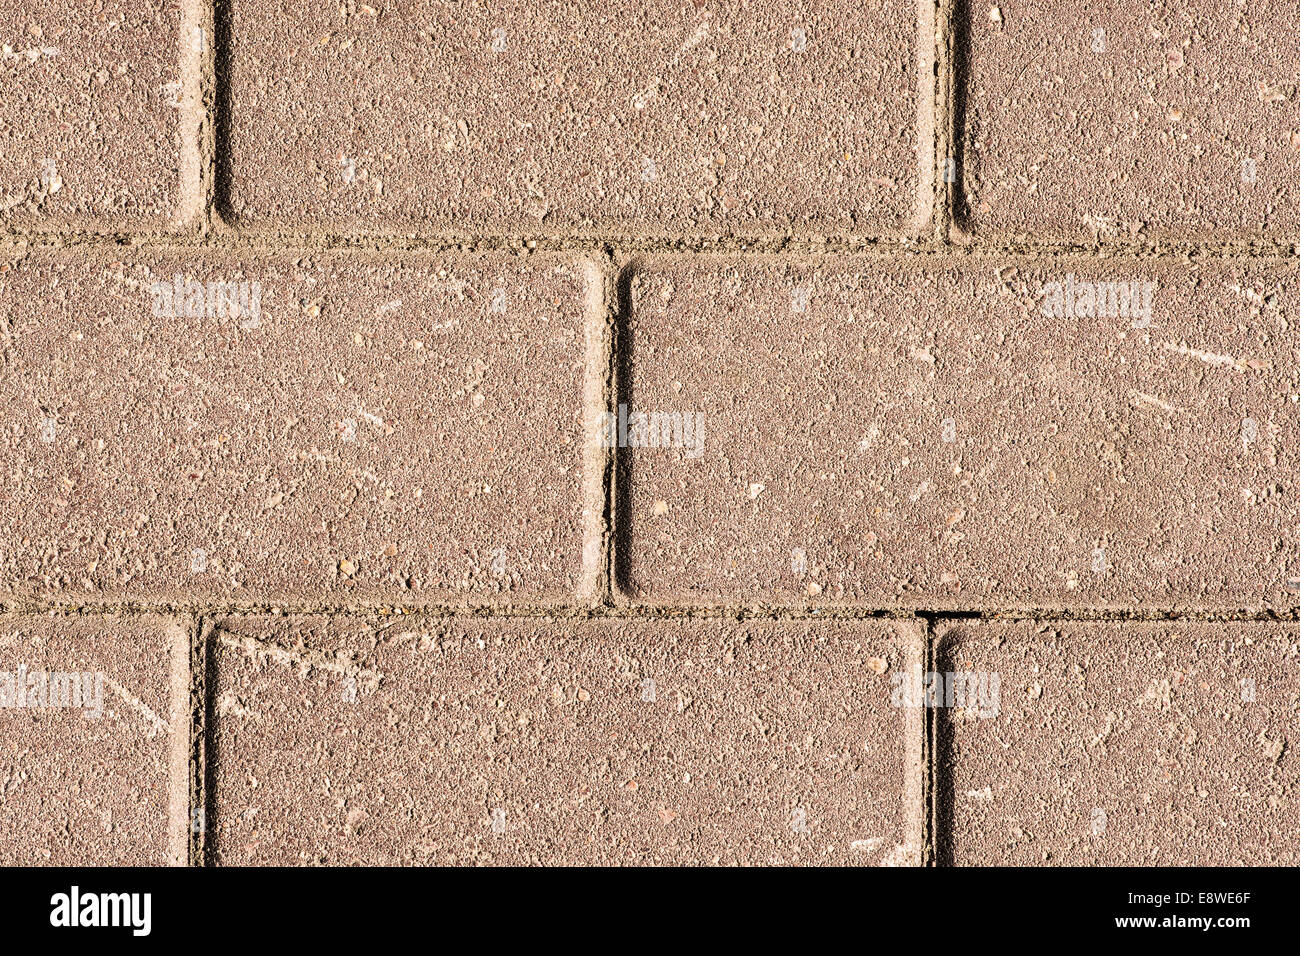 Paving slab texture. Closeup view of paving bricks in rows Stock Photo